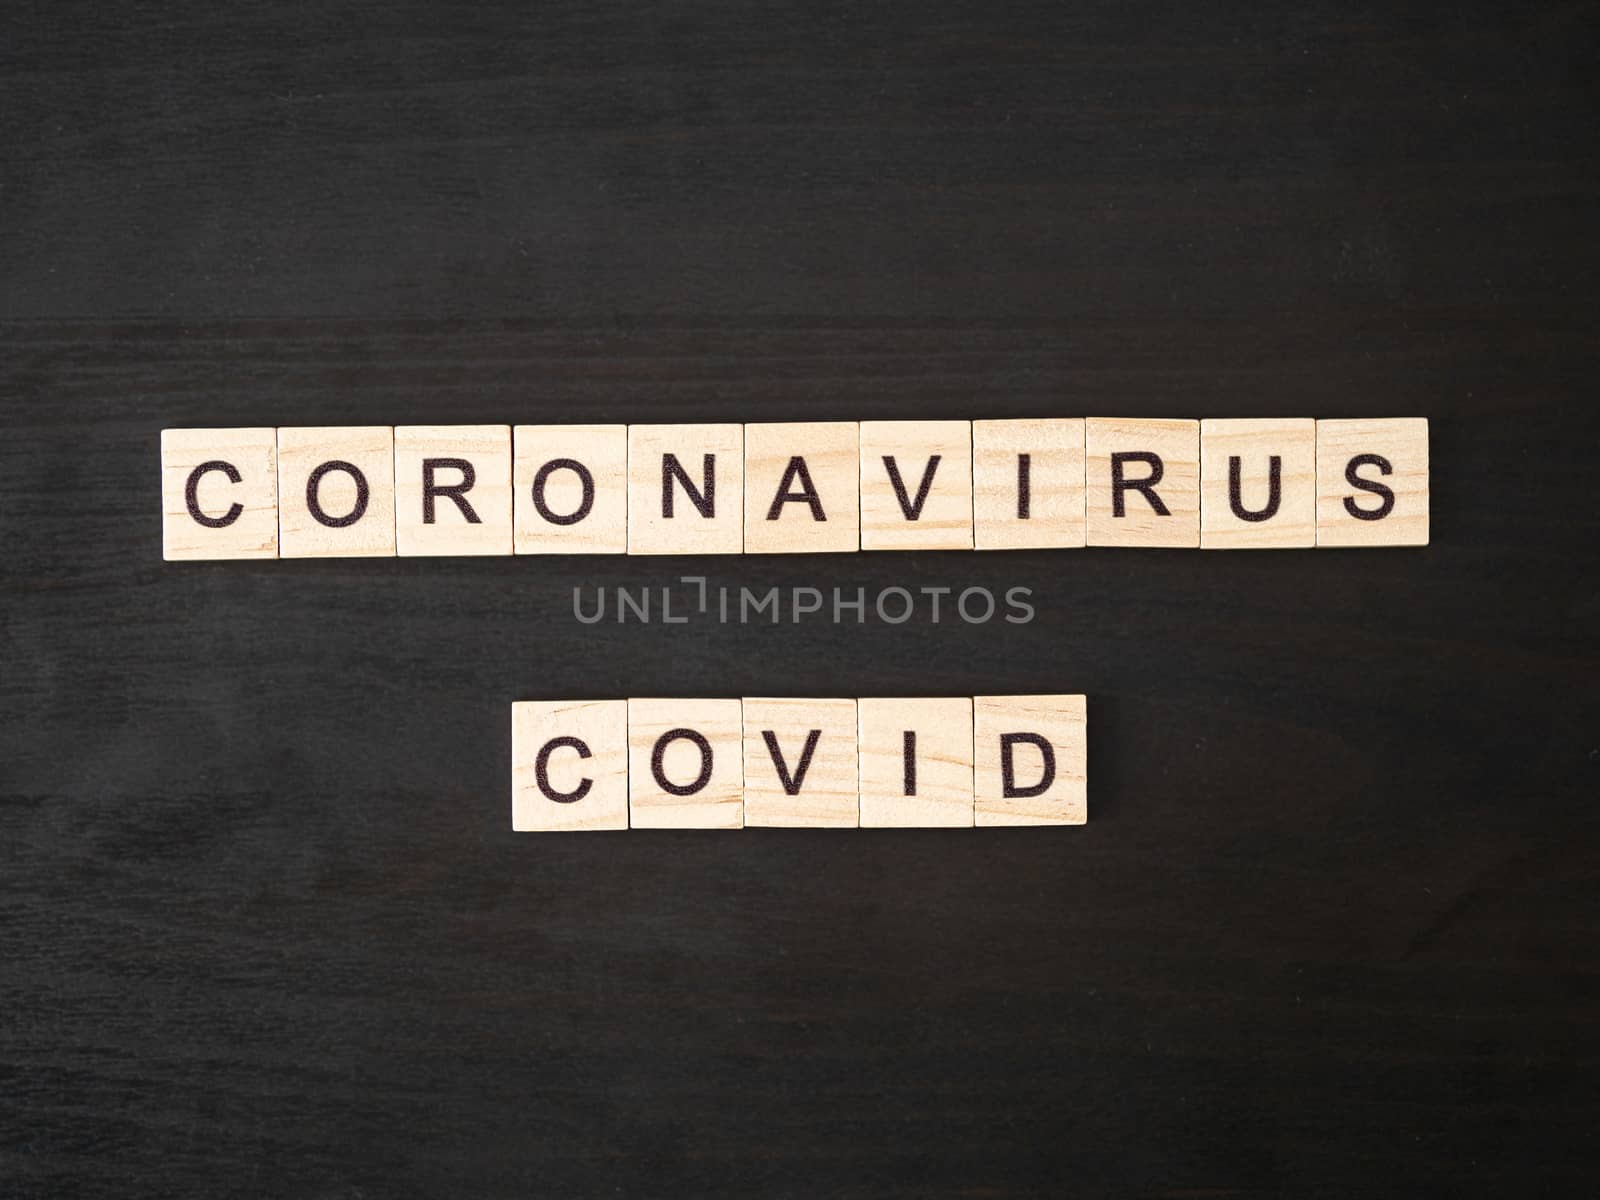 Coronavirus COVID words made of wood block. Coronavirus COVID text on dramatic atmosphere black wooden table. Coronavirus concept top view.